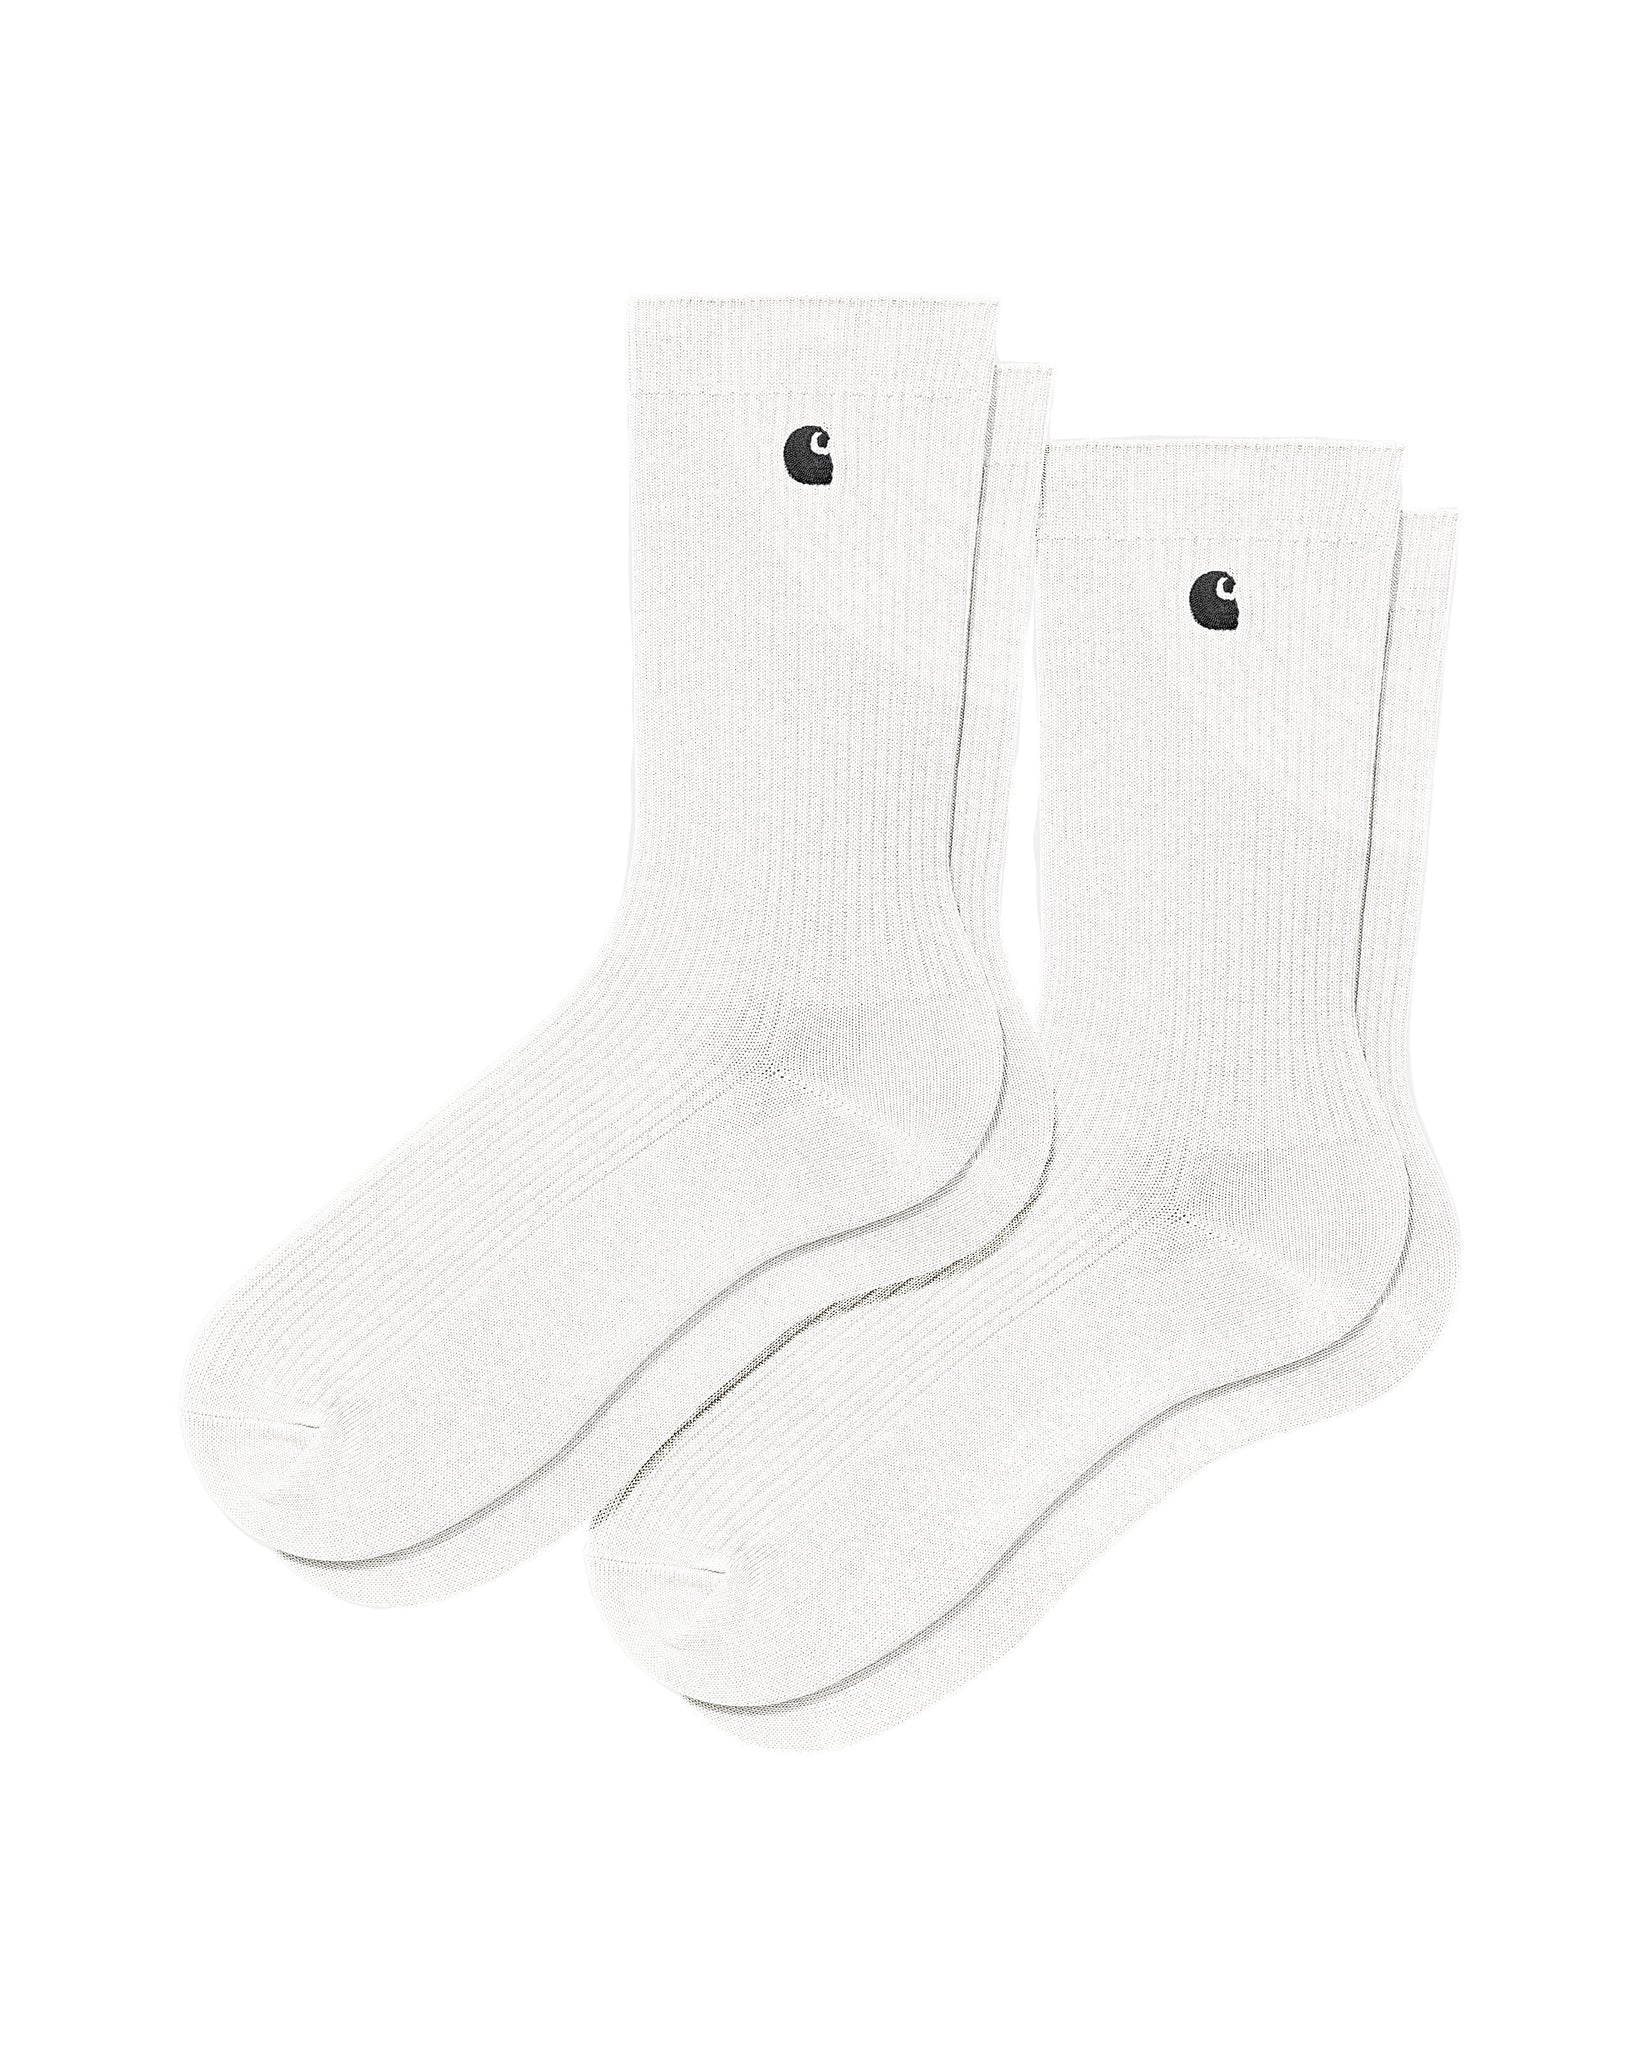 Madison socks (2 pairs Pack) - White/Black